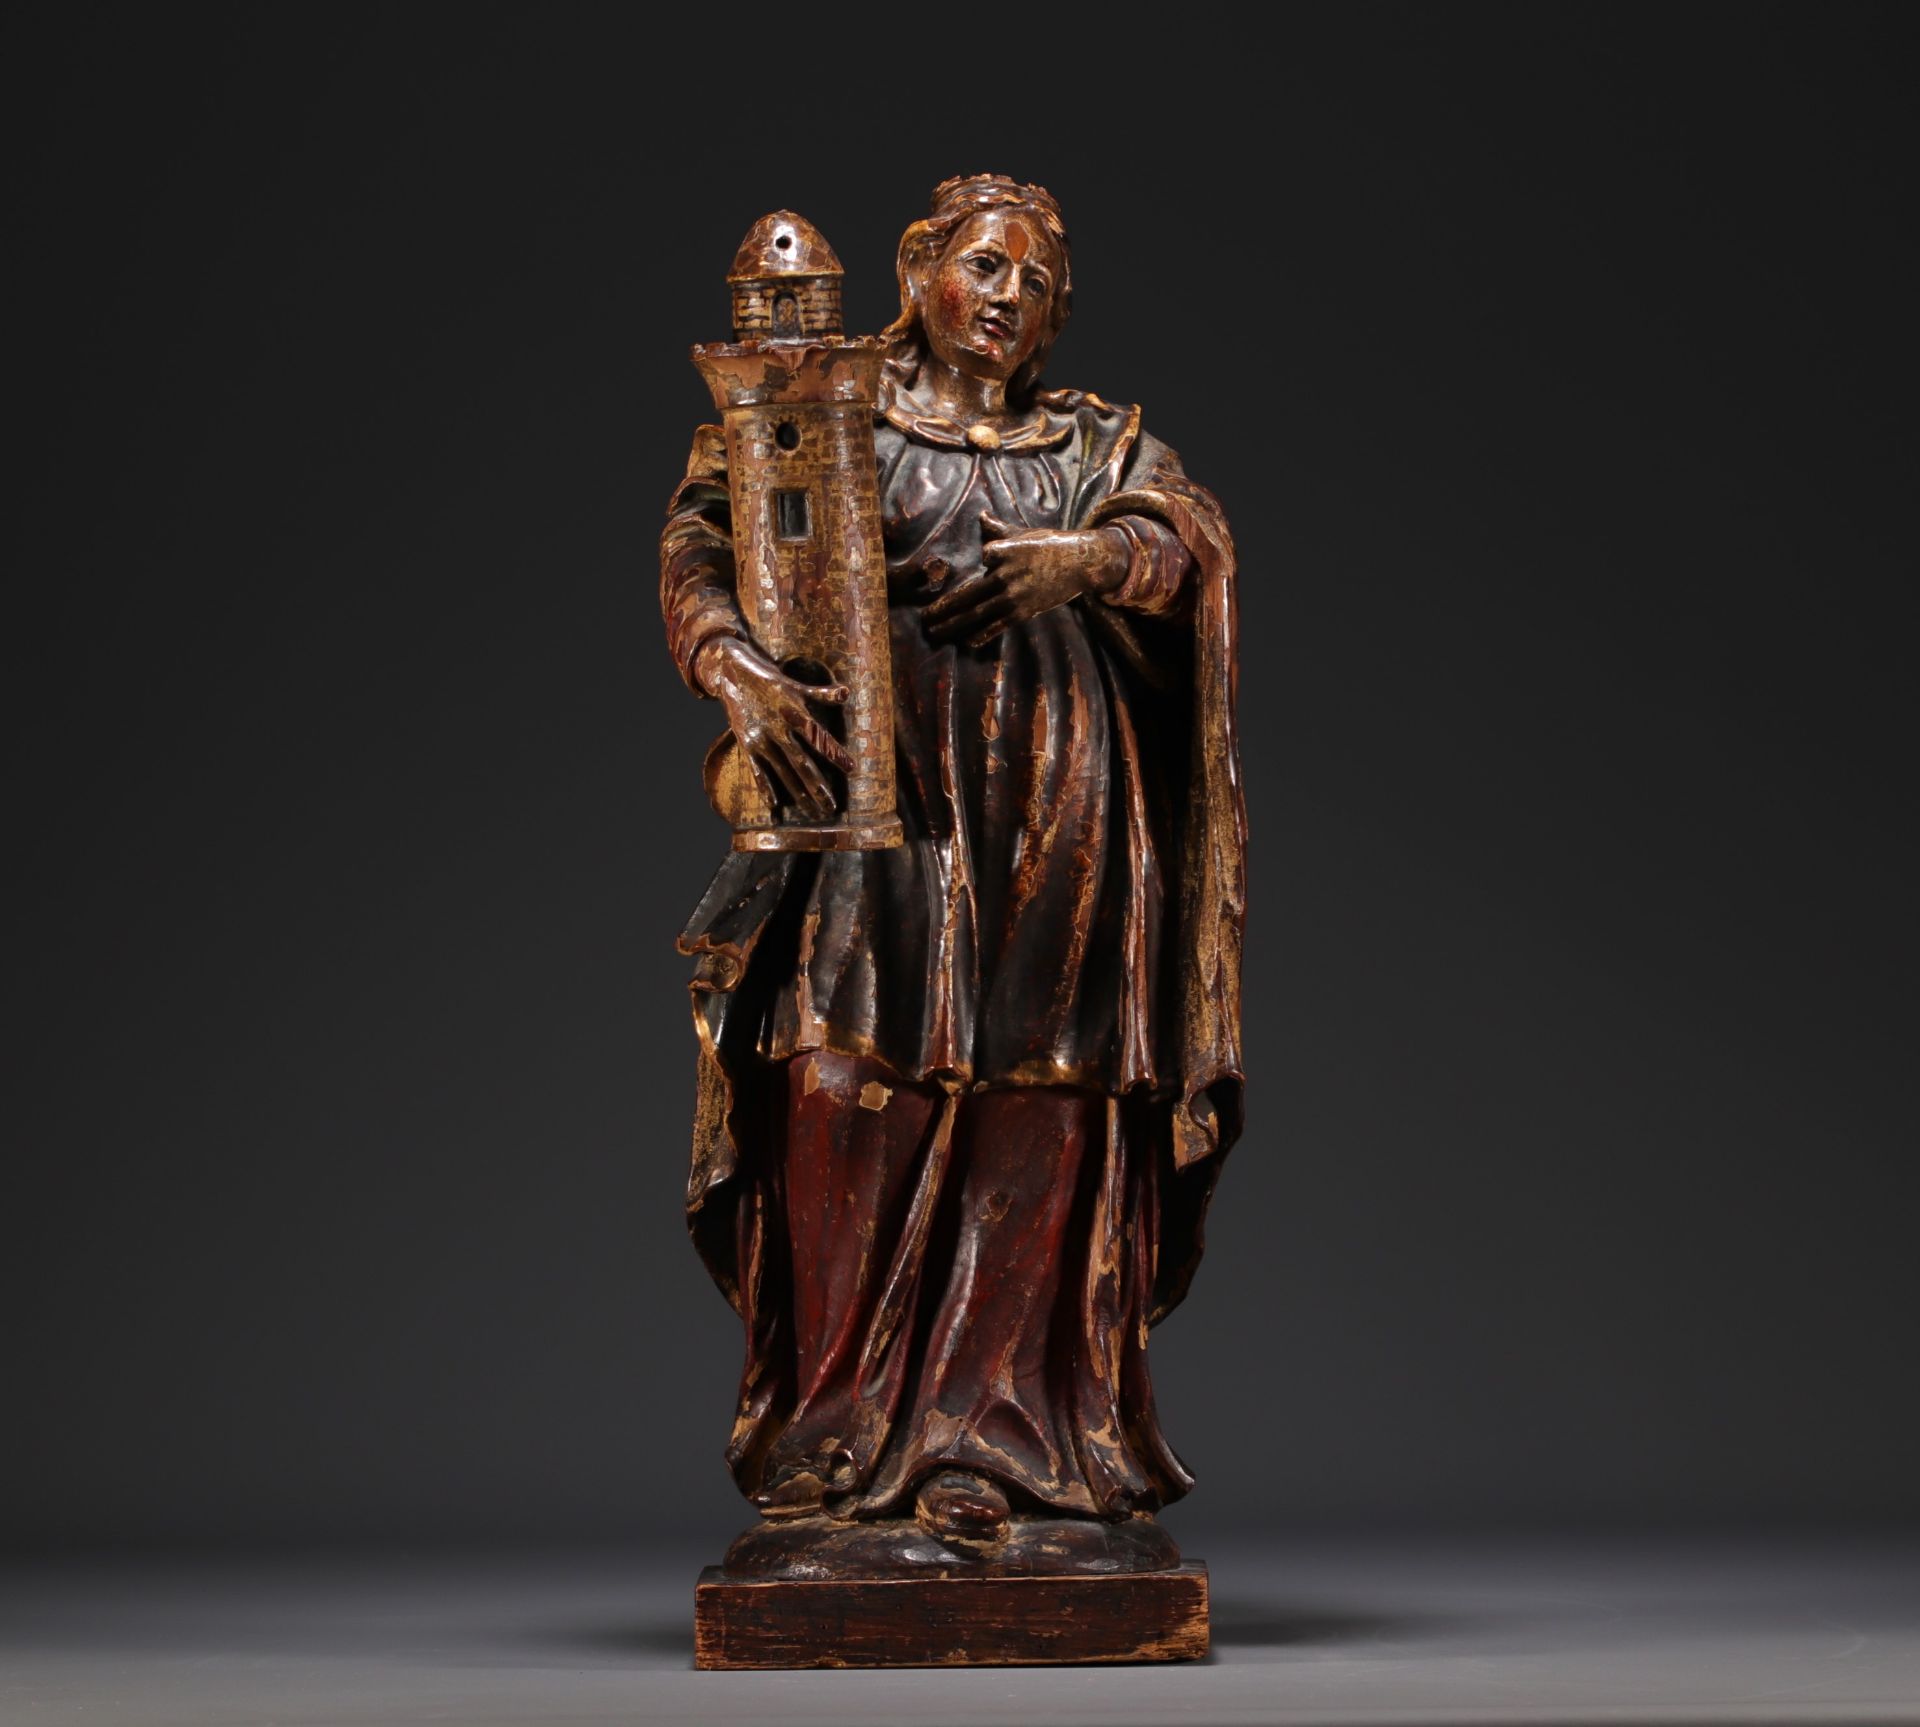 Statue de Sainte-Barbe - polychrome wooden sculpture from 18th century.